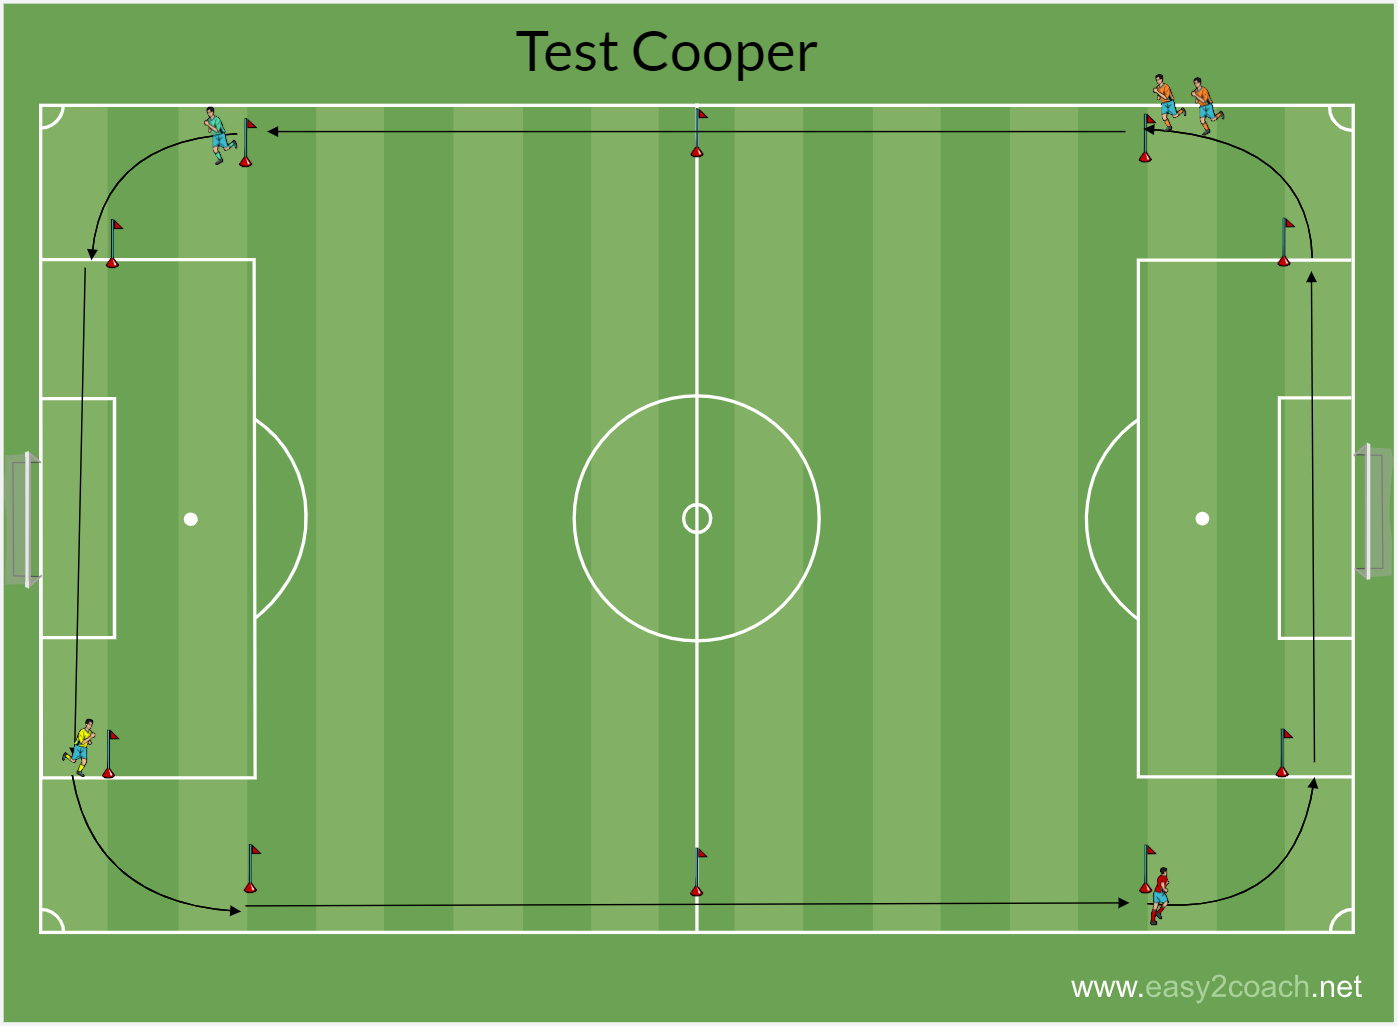 Test_Cooper.png